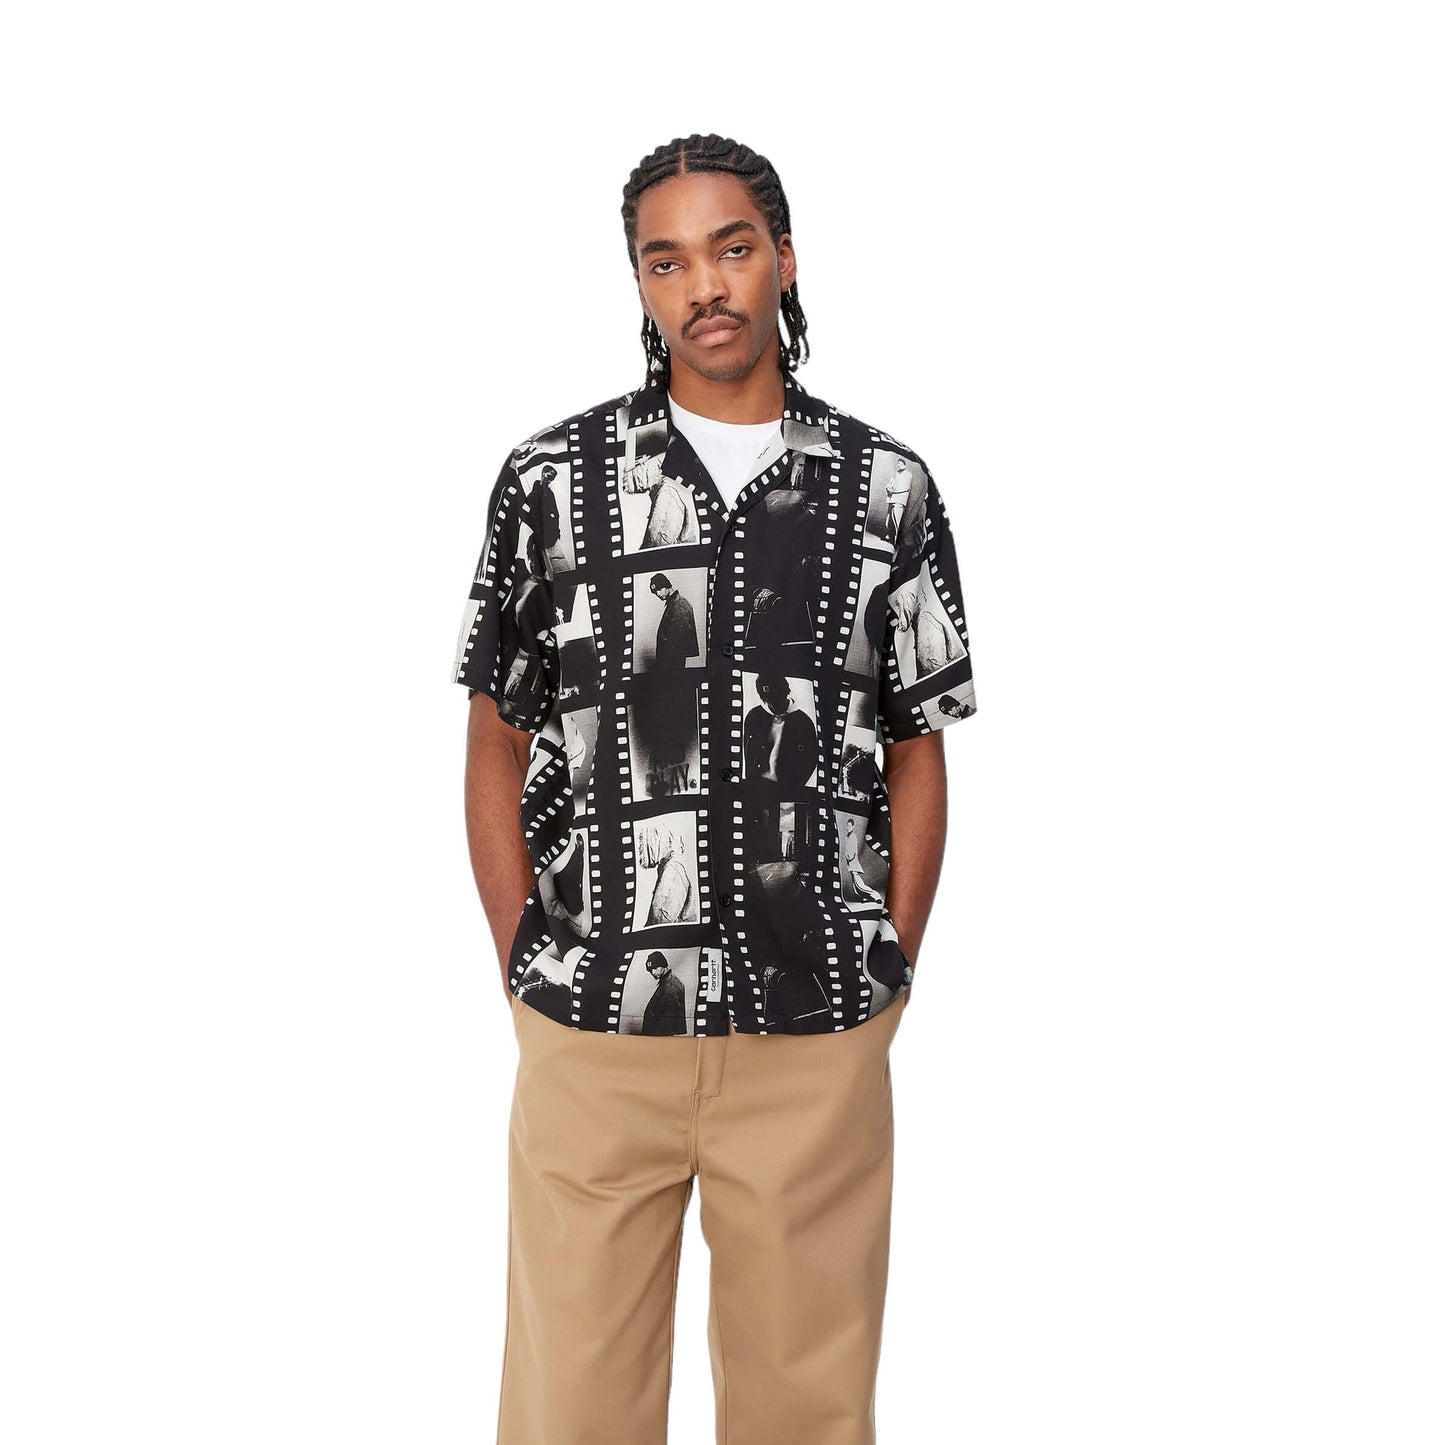 Carhartt WIP S/S Photo Strip Shirt-photo-strip-aop-black-white